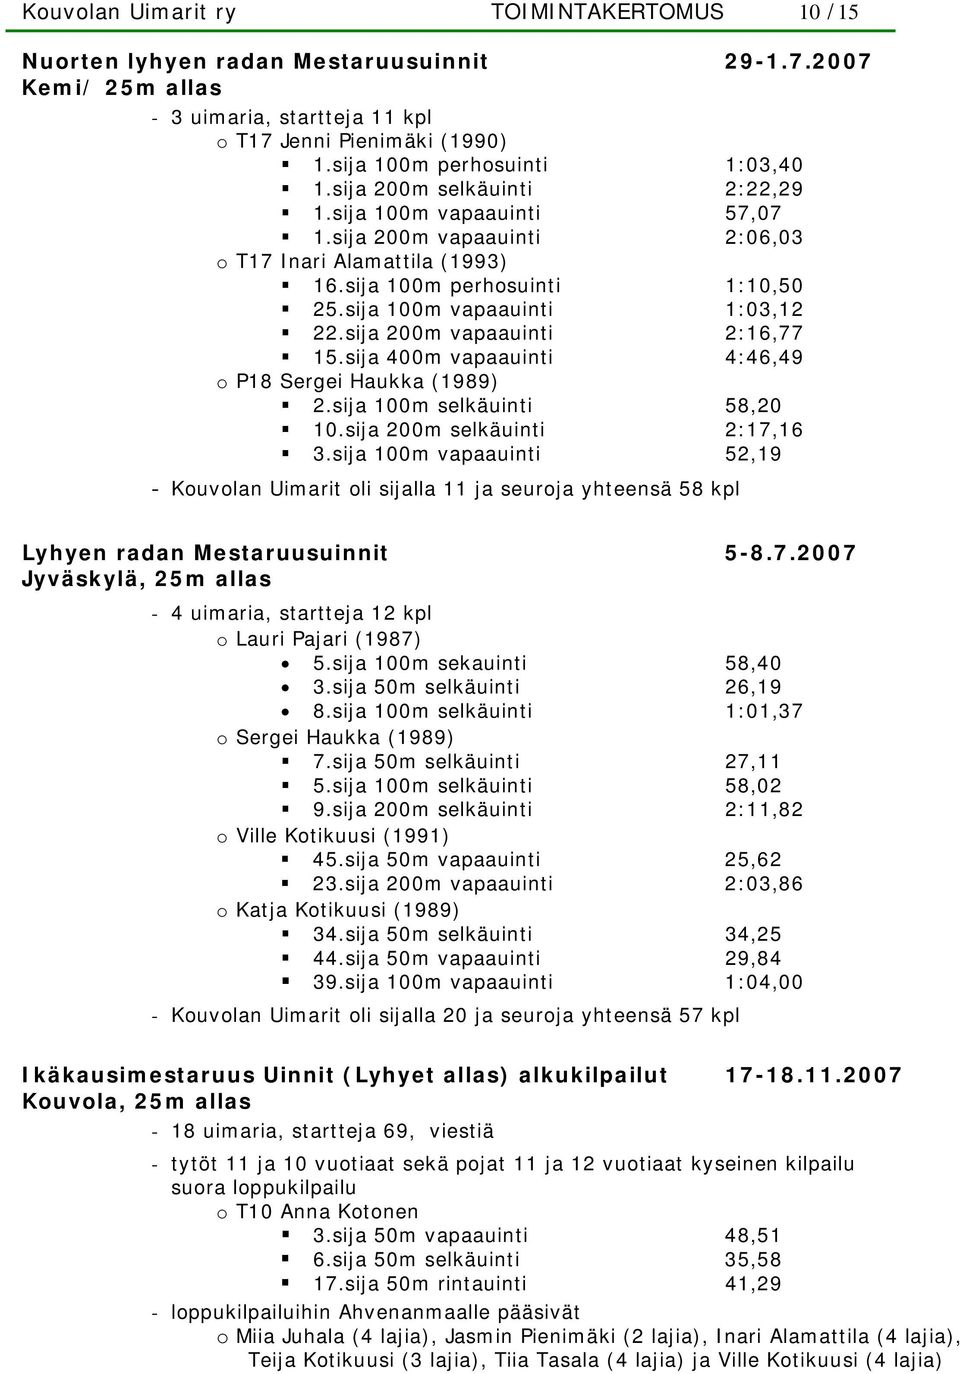 sija 100m vapaauinti 1:03,12 22.sija 200m vapaauinti 2:16,77 15.sija 400m vapaauinti 4:46,49 o P18 Sergei Haukka (1989) 2.sija 100m selkäuinti 58,20 10.sija 200m selkäuinti 2:17,16 3.